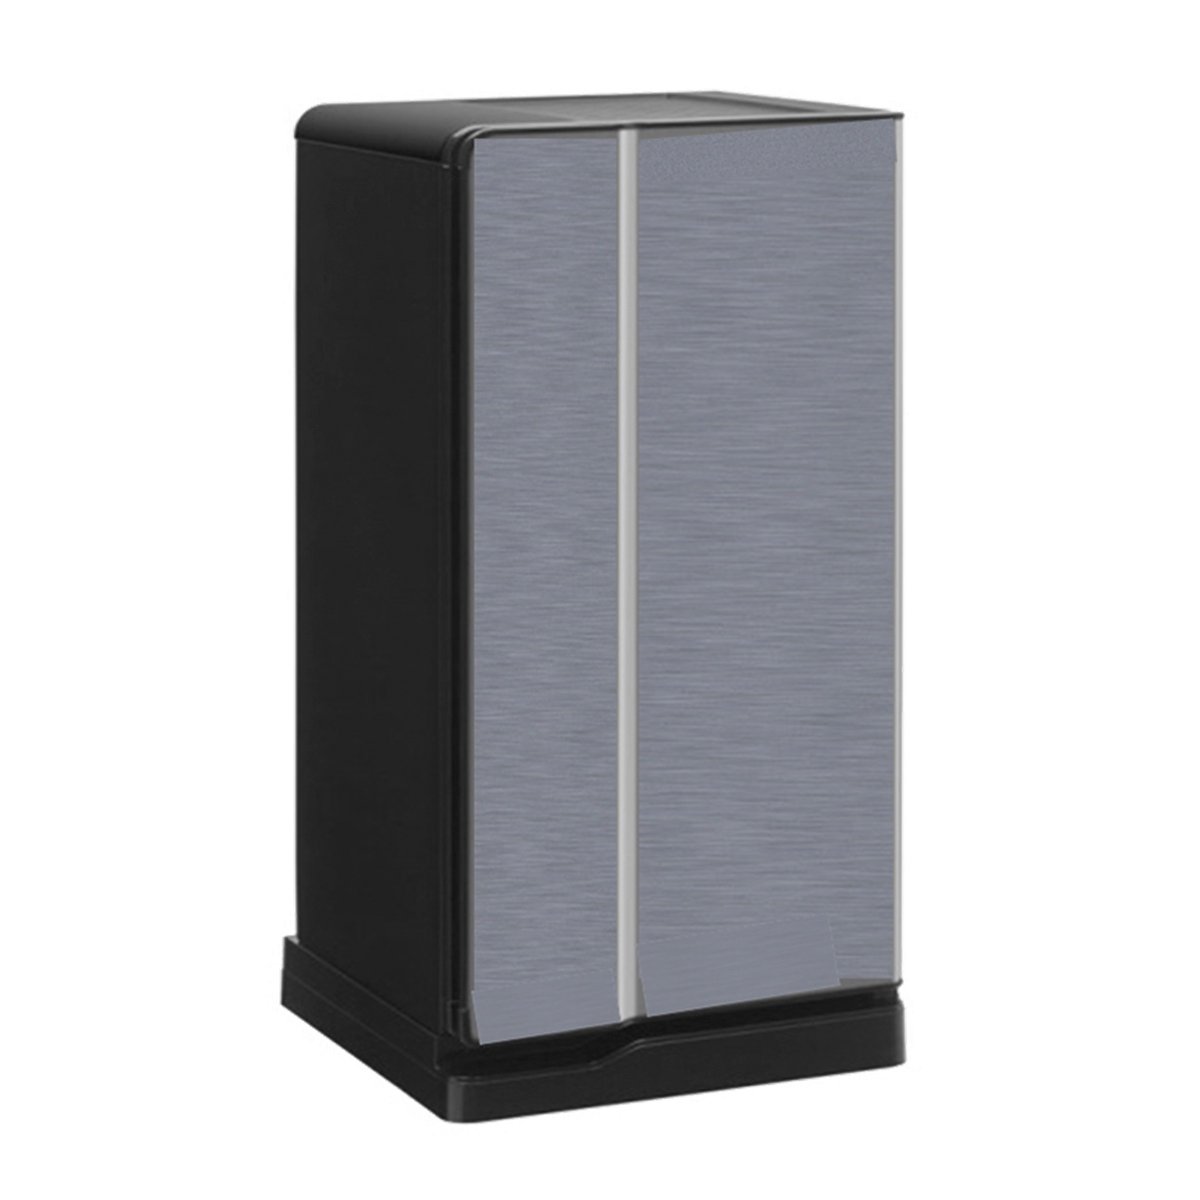 Buy Toshiba Single Door Refrigerator GR-E185G 181Ltr Online at Best Price | Sgl Door Refrigeratr | Lulu Kuwait in Kuwait